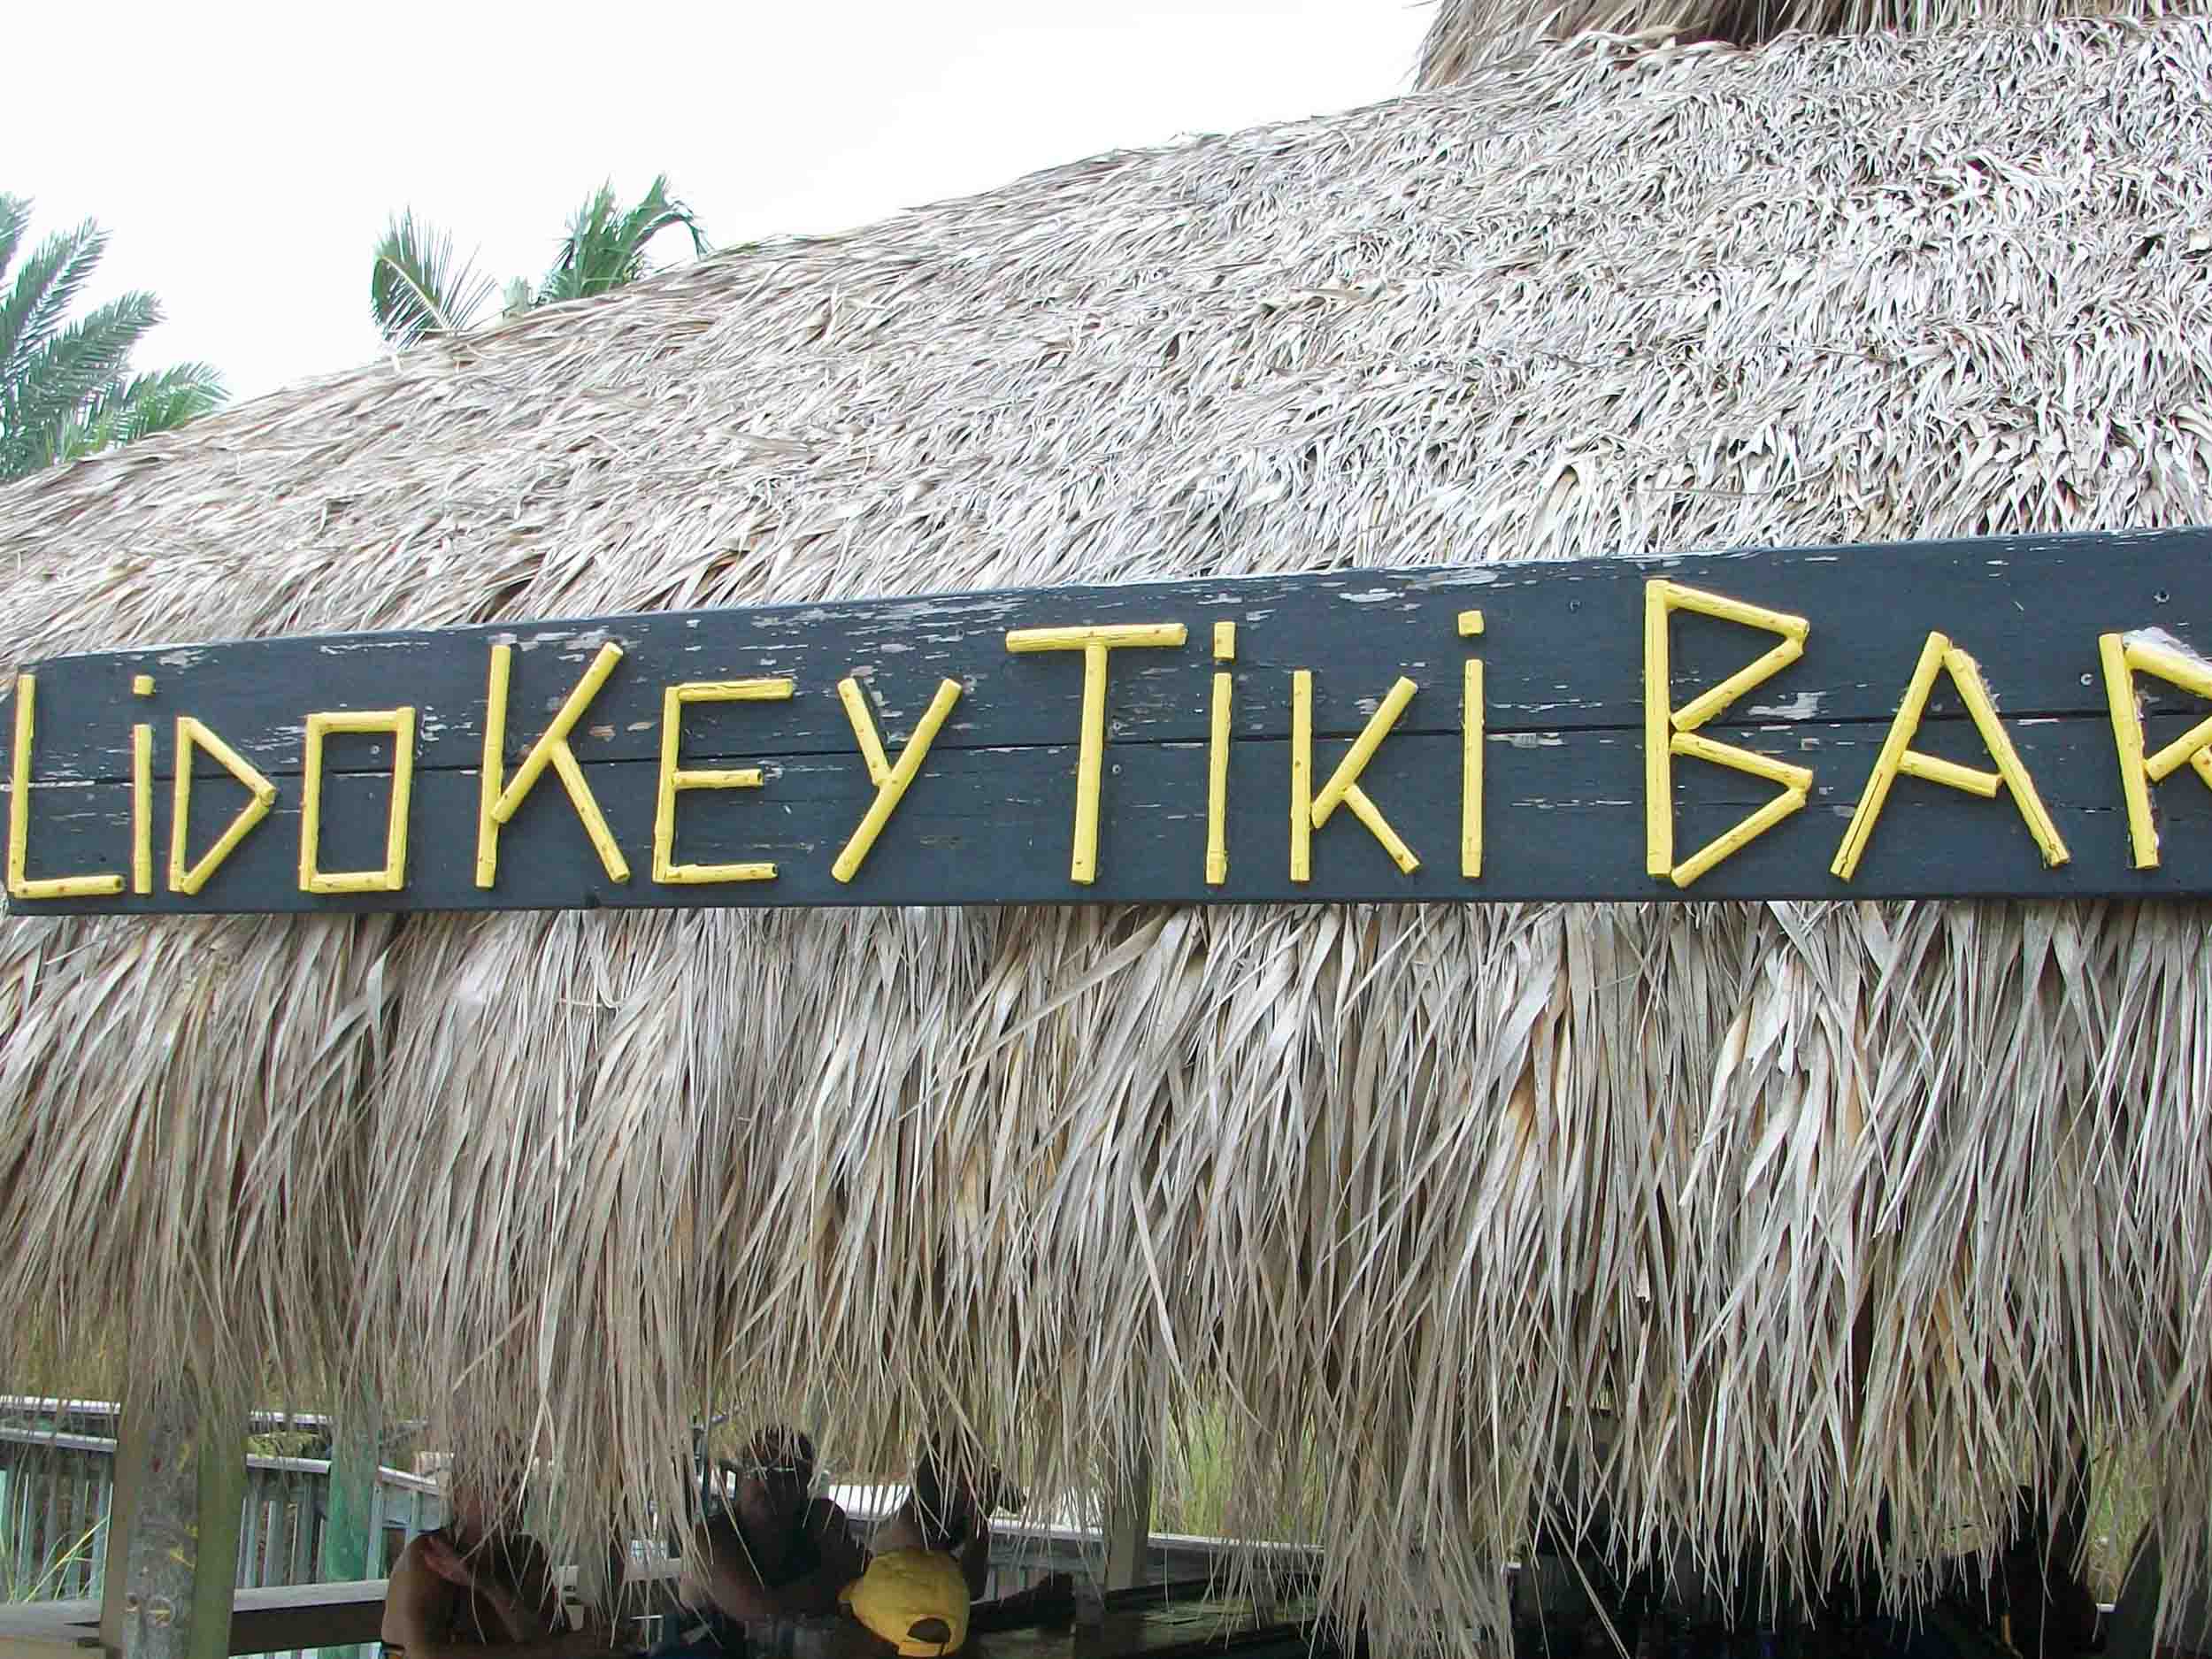 Lido Key Tiki Bar Sign